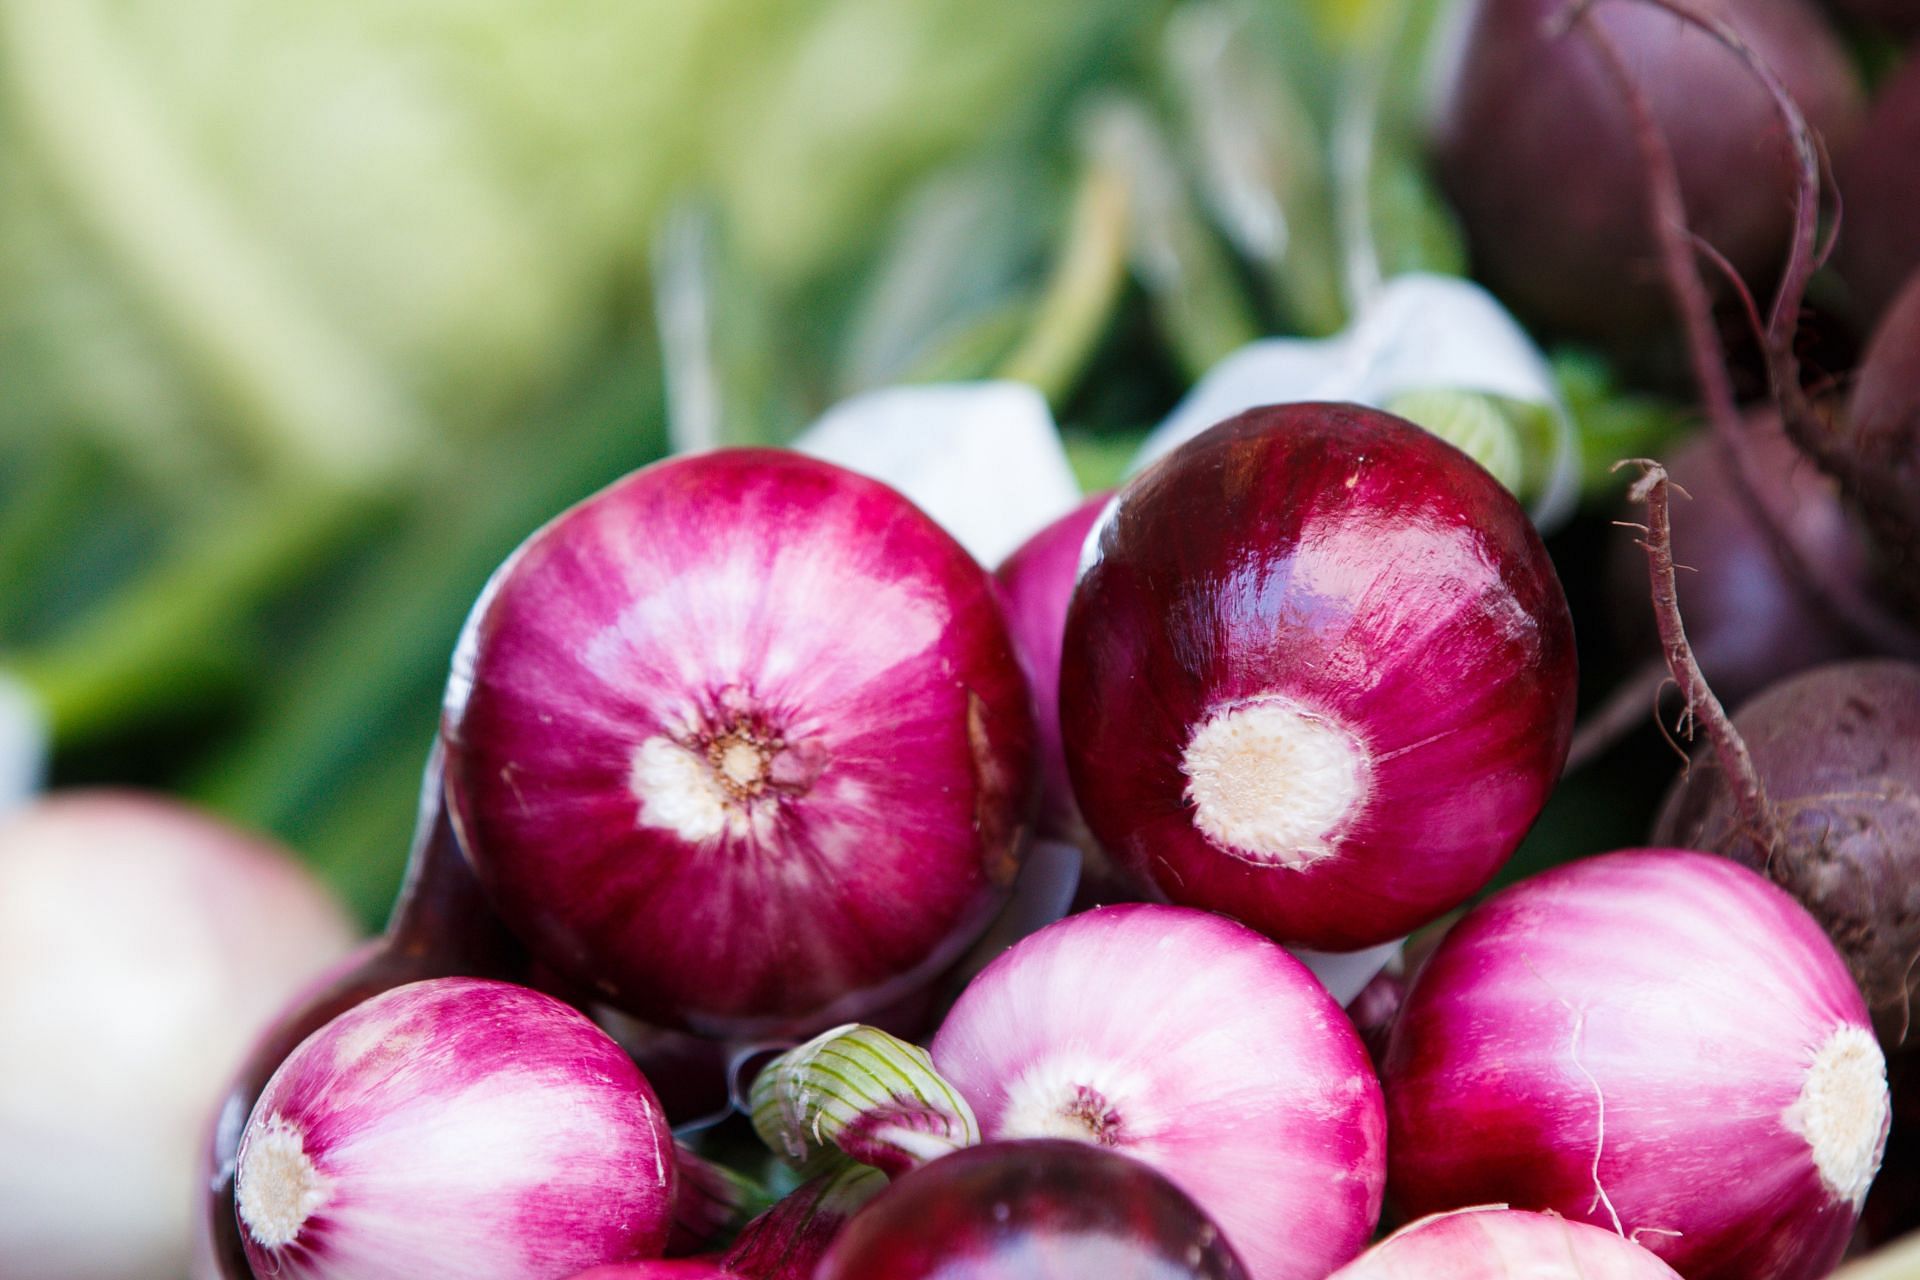 Onion nutrition facts and health benefits (Image via Unsplash/Thomas Martinsen)